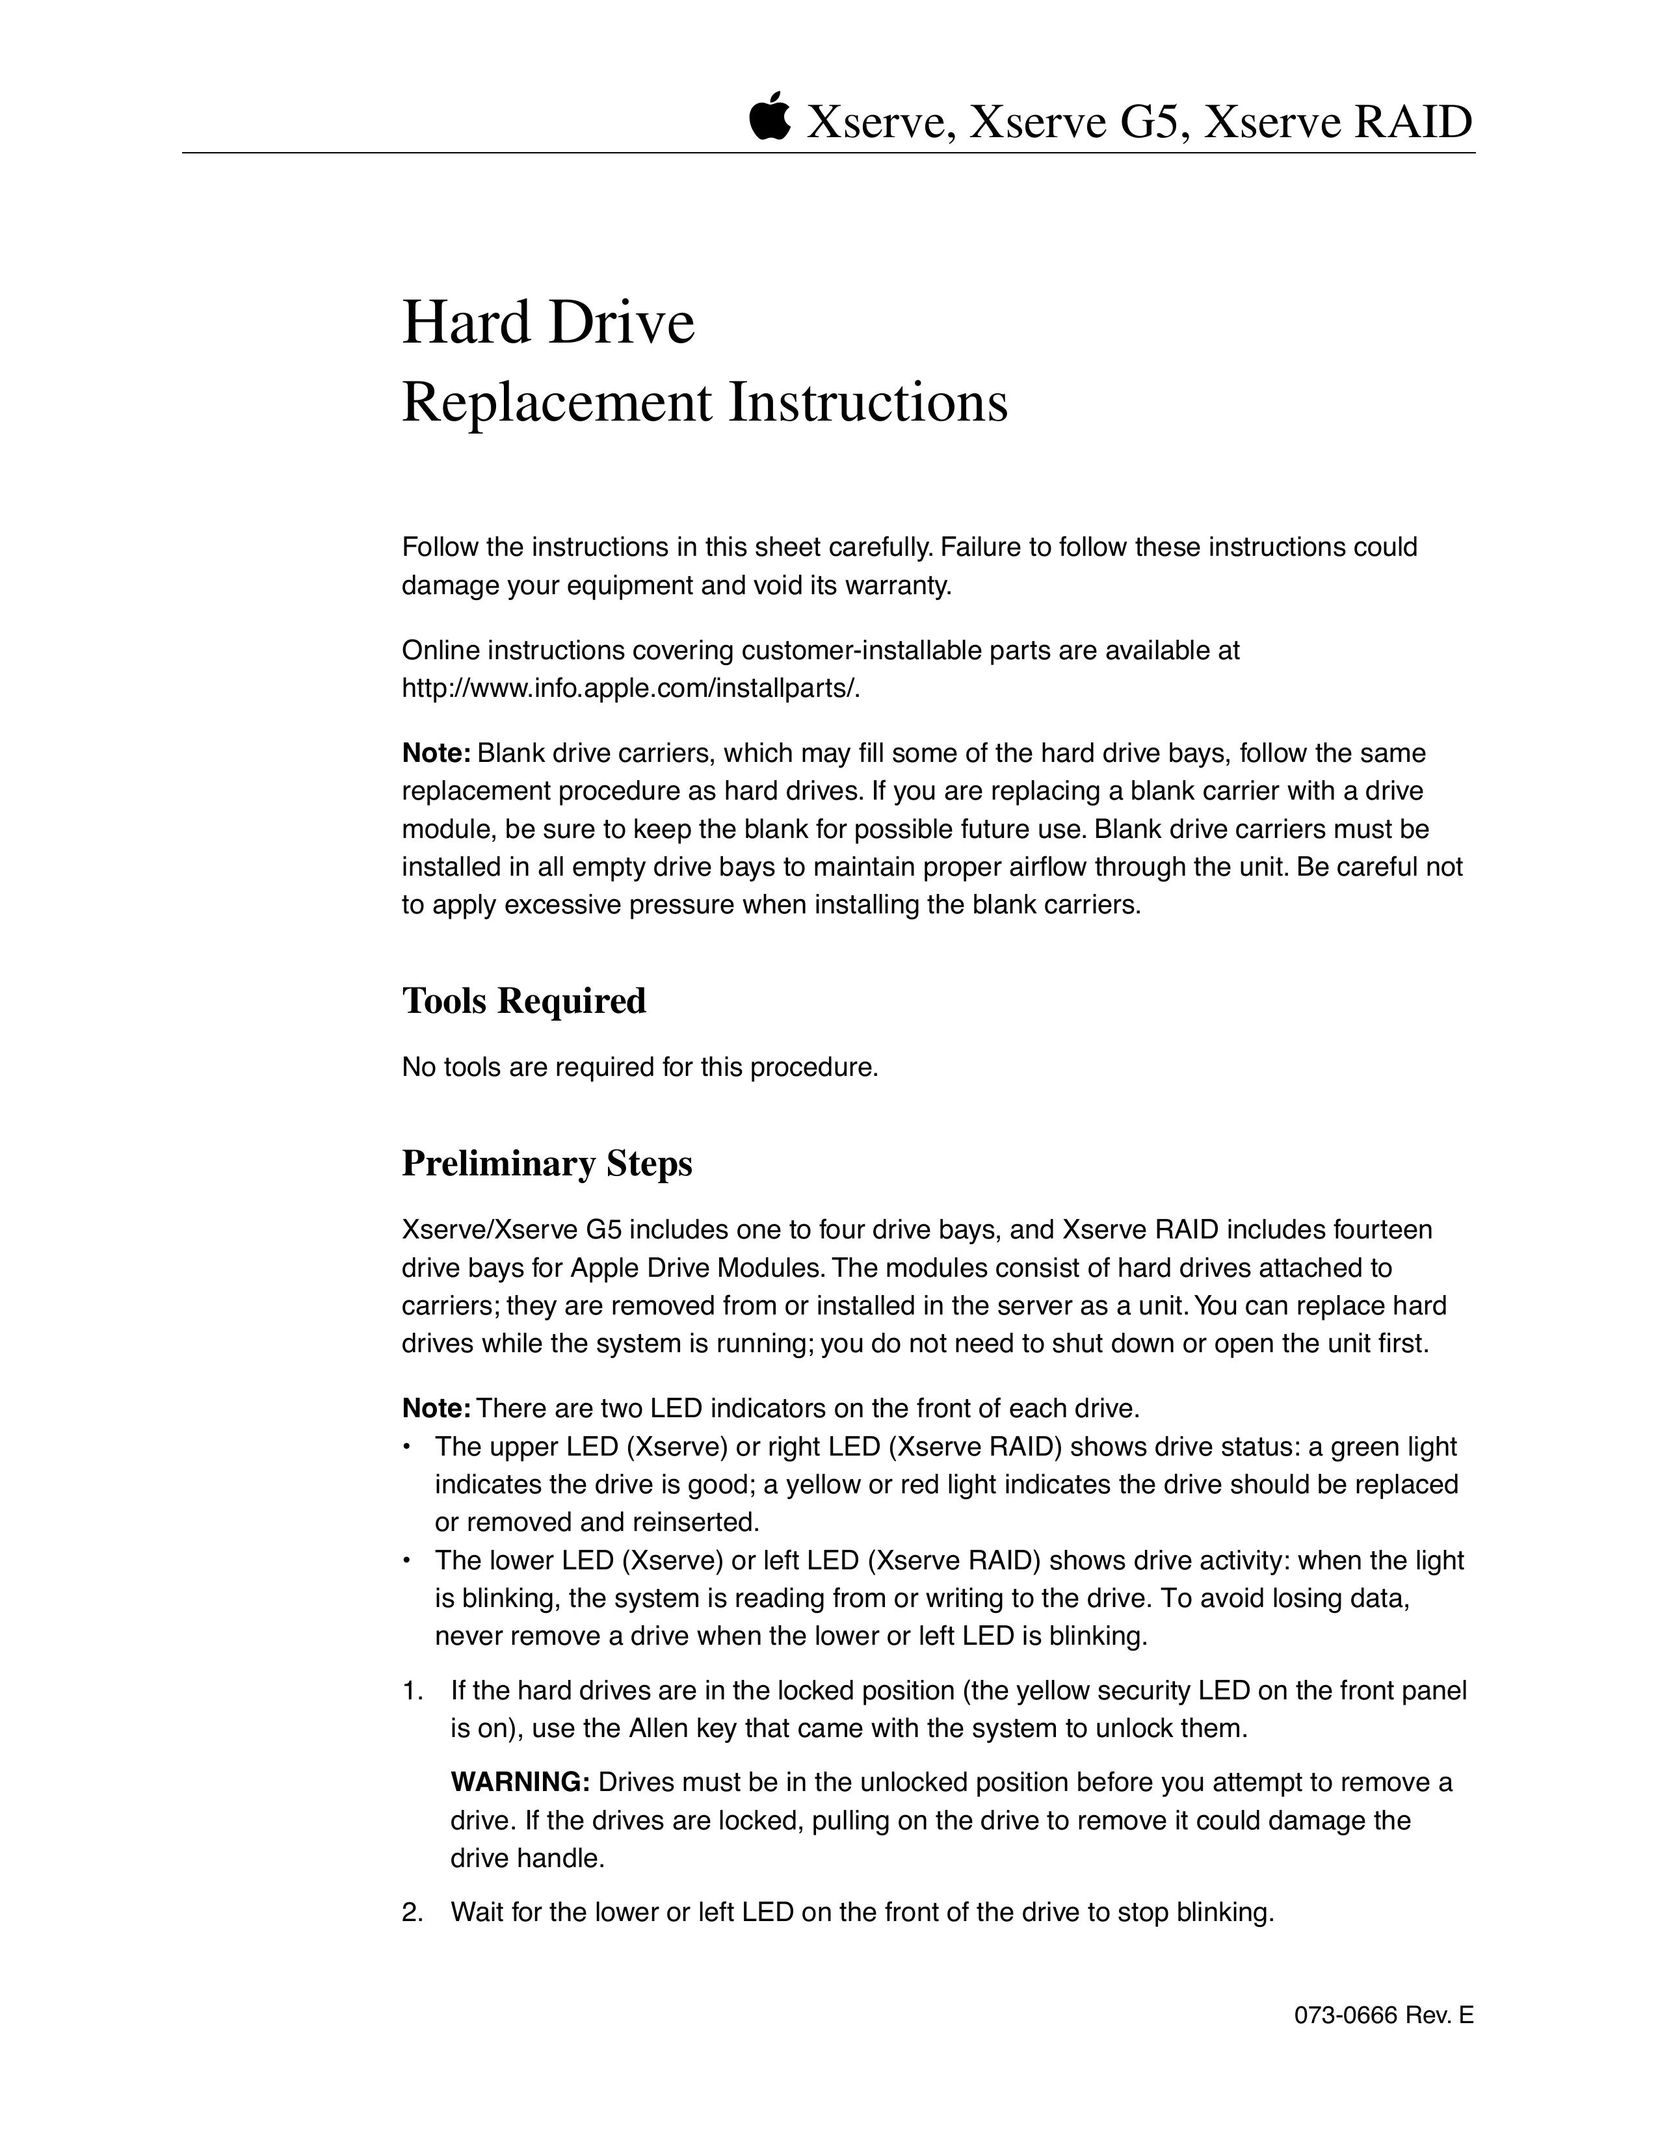 Apple XSERVE RAID Computer Drive User Manual